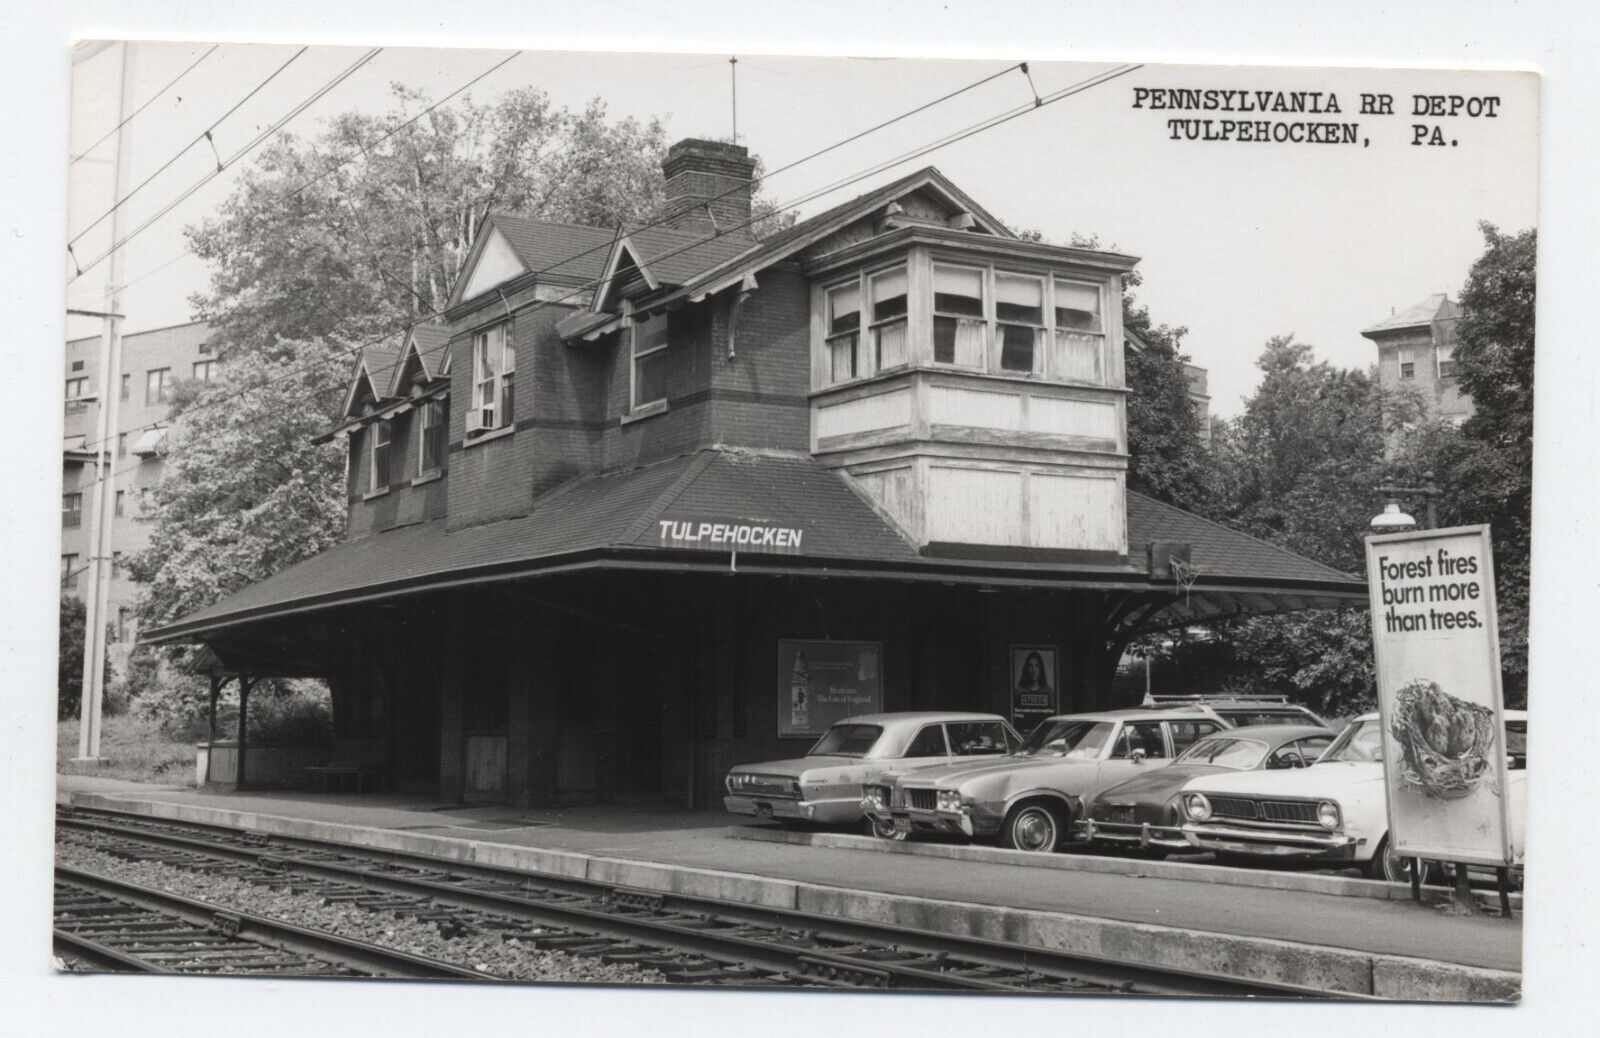 1970s realphoto b&w postcard Pennsylvania RR depot Tulpehocken PA [S.2931]